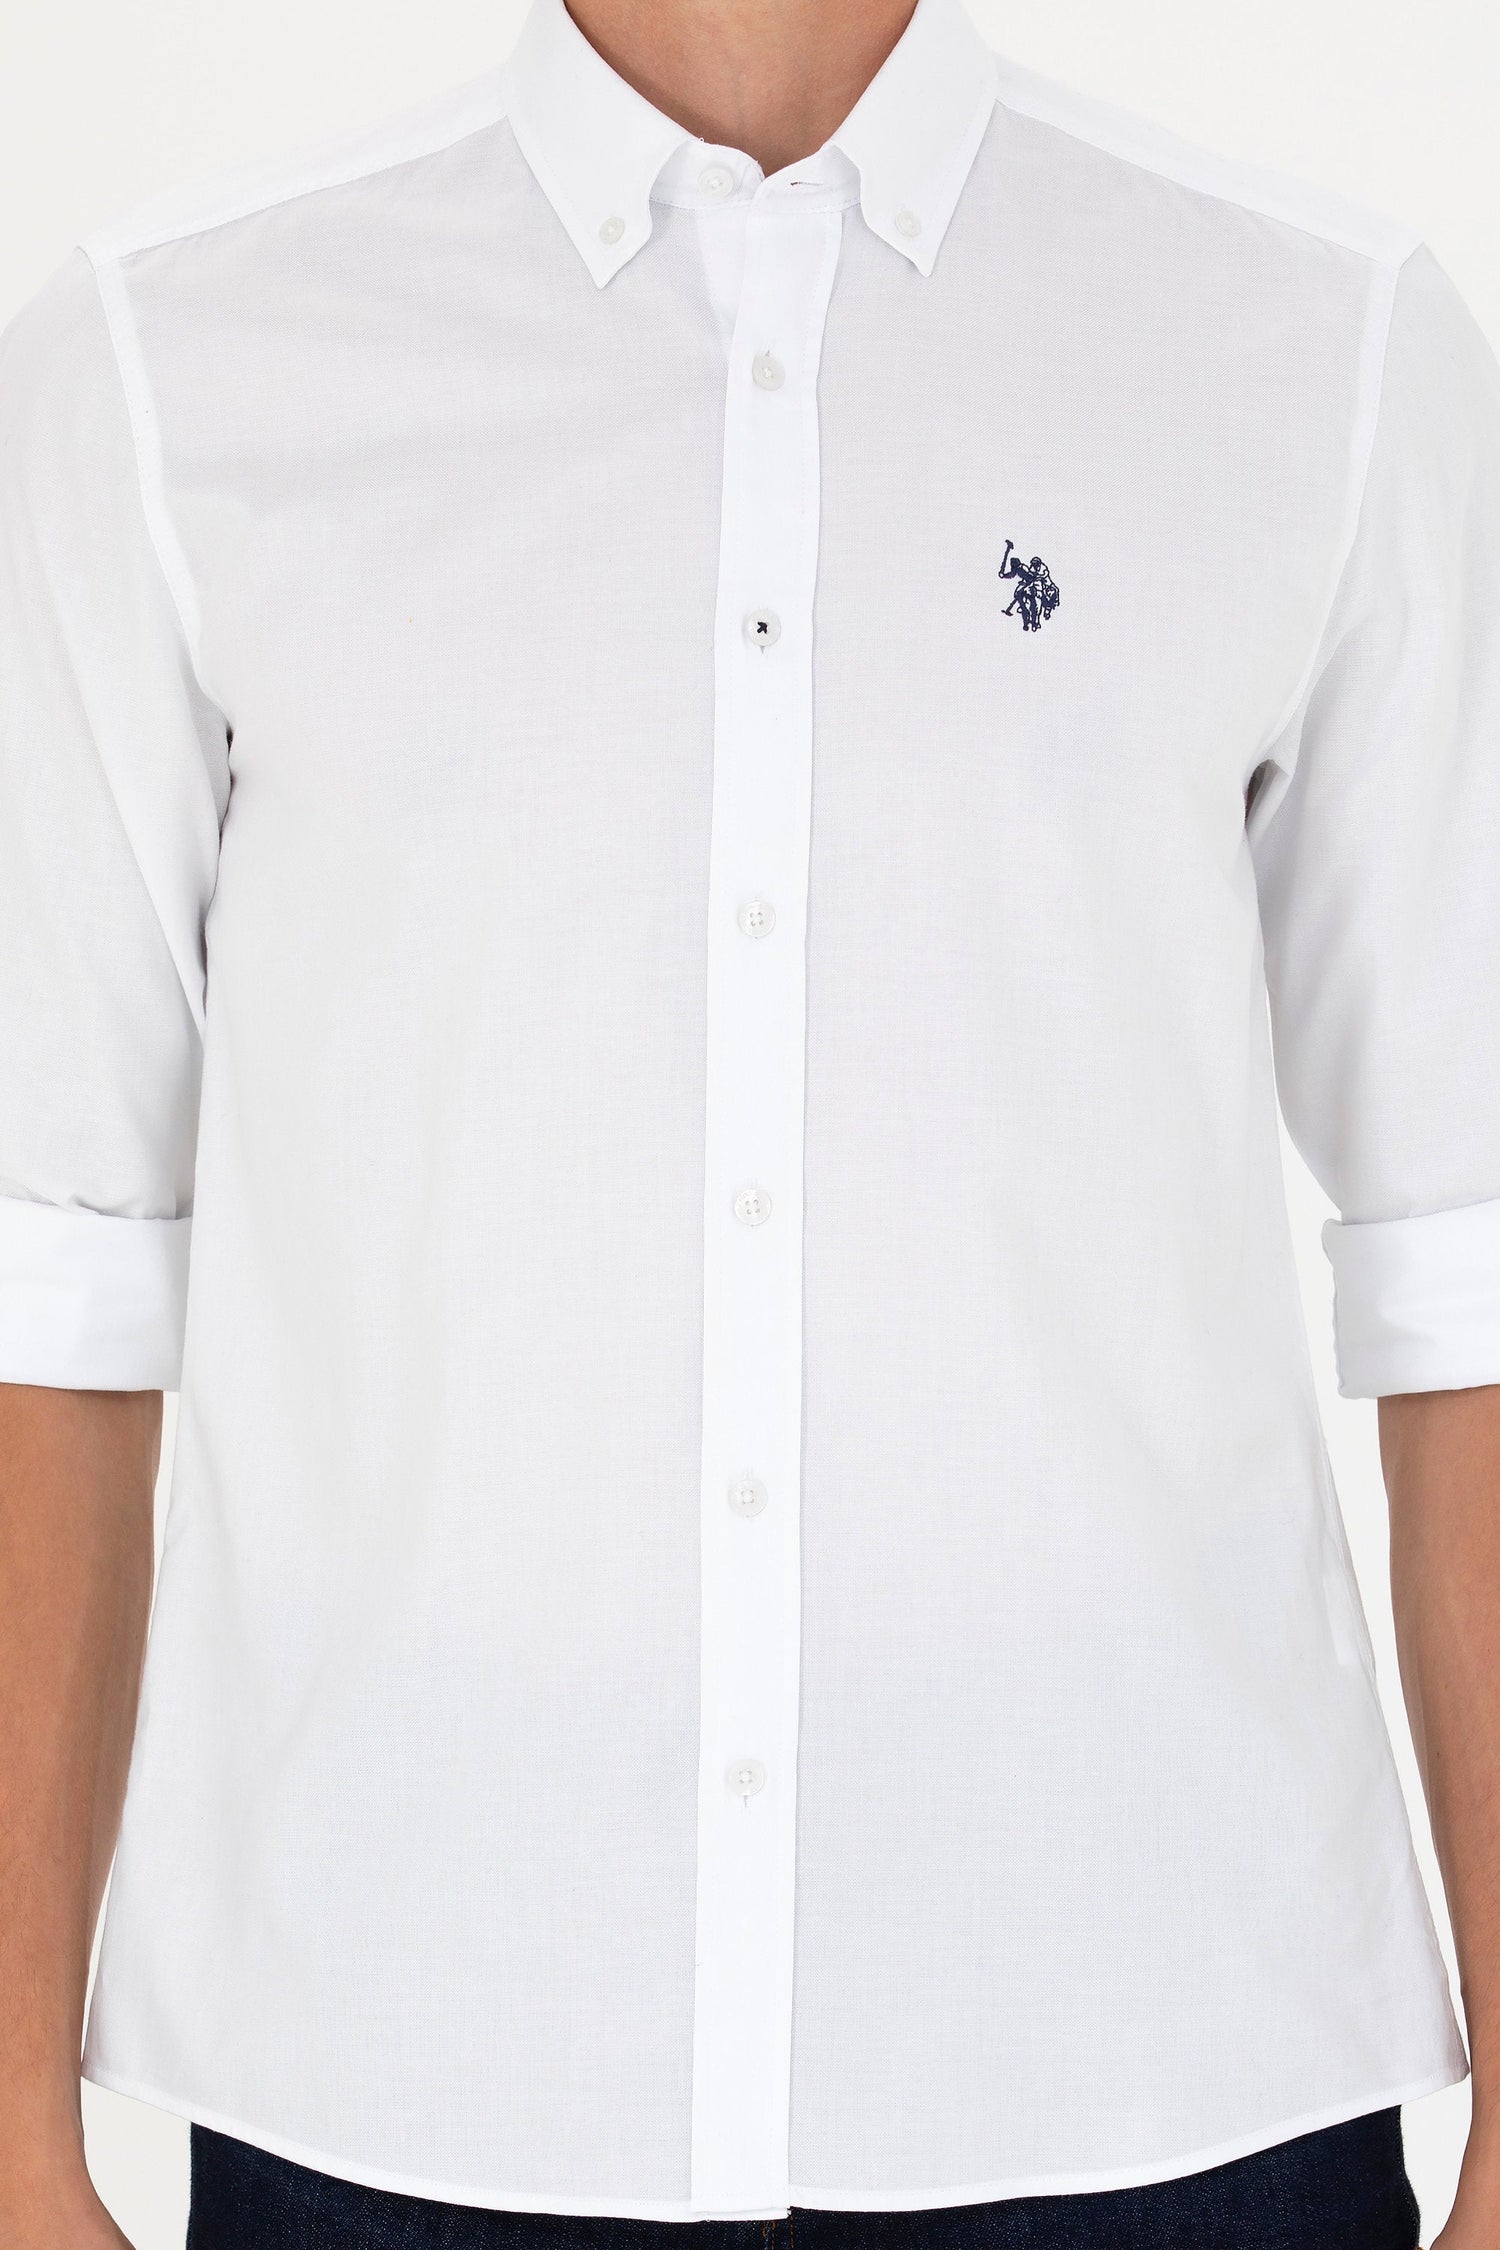 White Shirt With USPA Logo_G081SZ0040 1672487_VR013_02